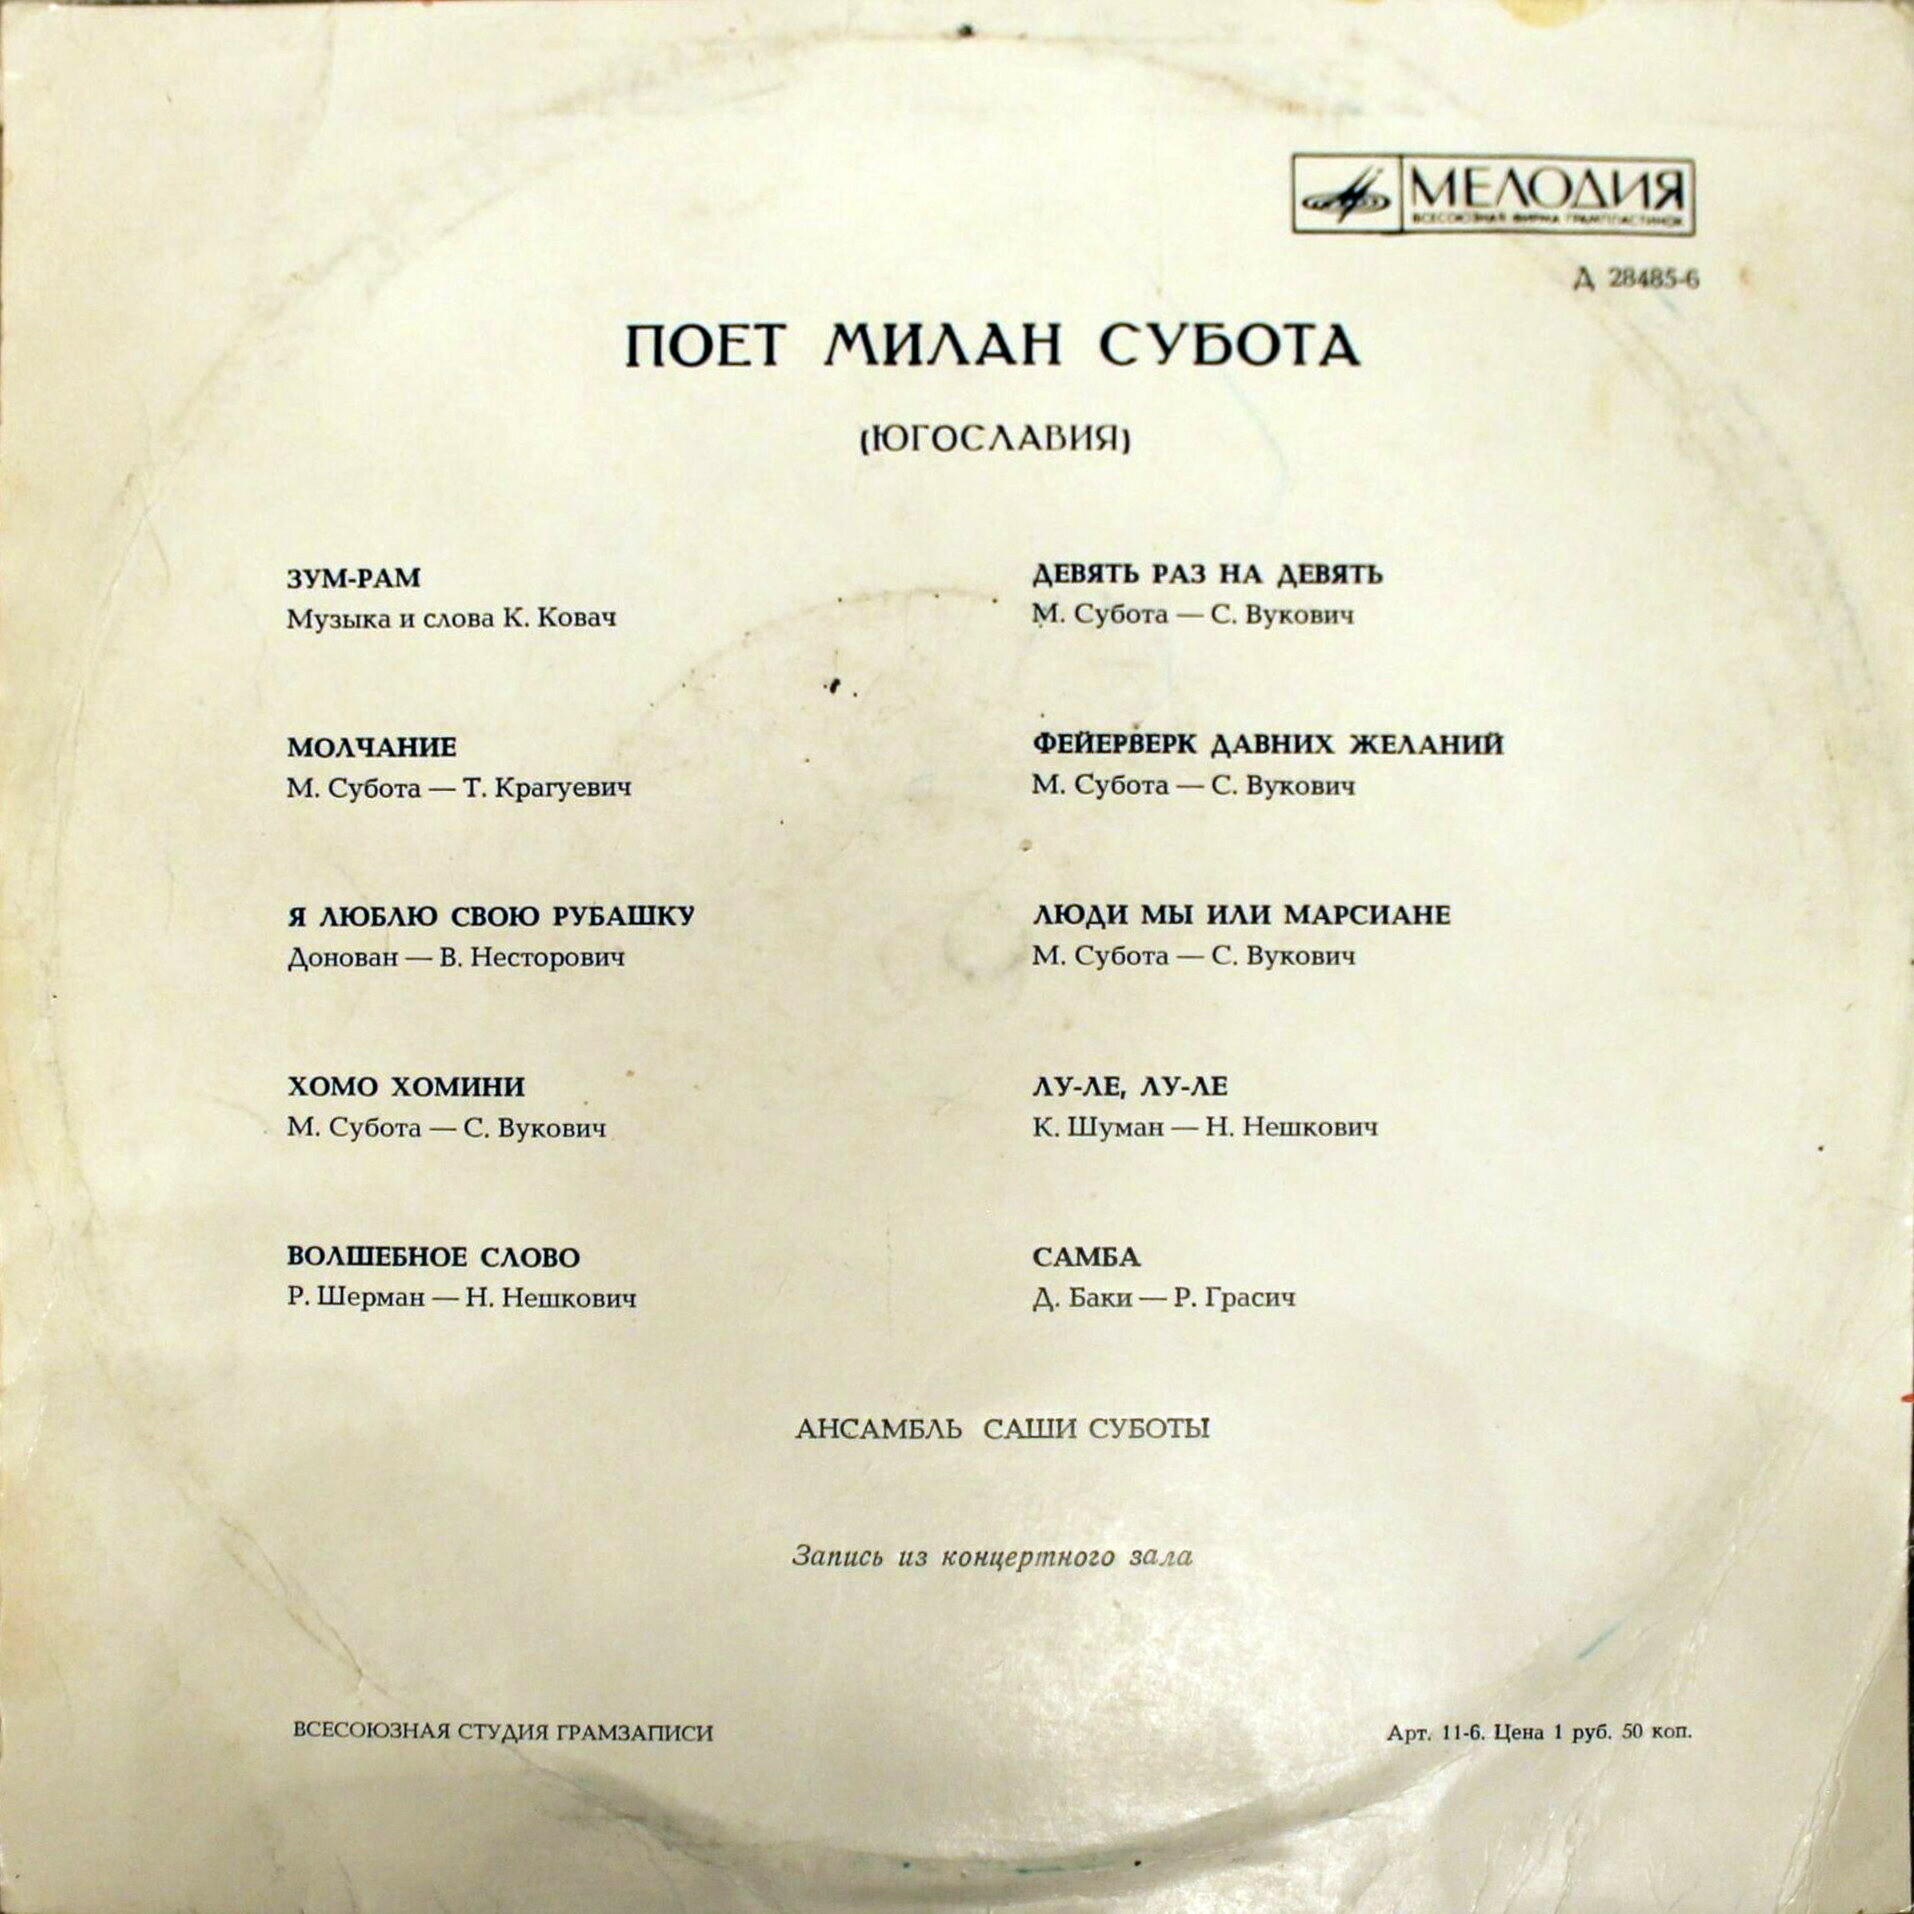 Поёт Милан Субота (Югославия)